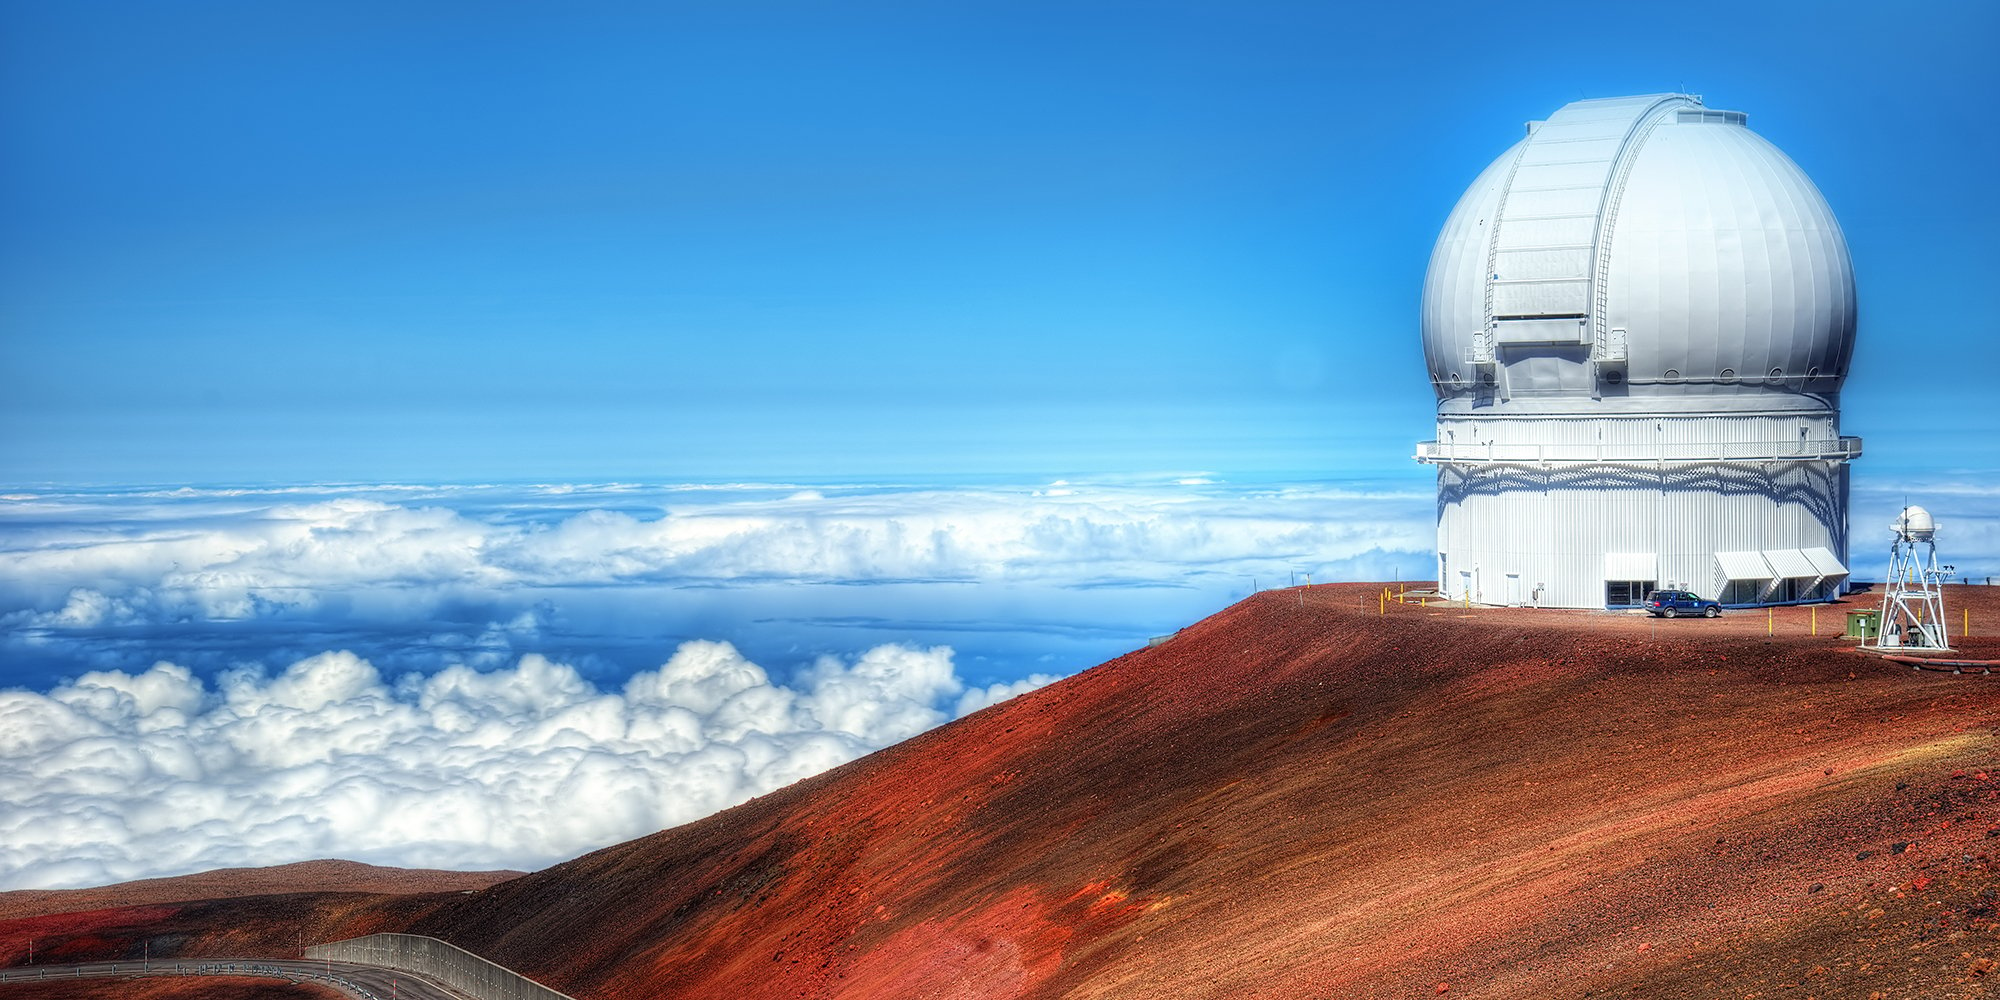 Celebrating AAPI Heritage Month with Mauna Kea Observatory